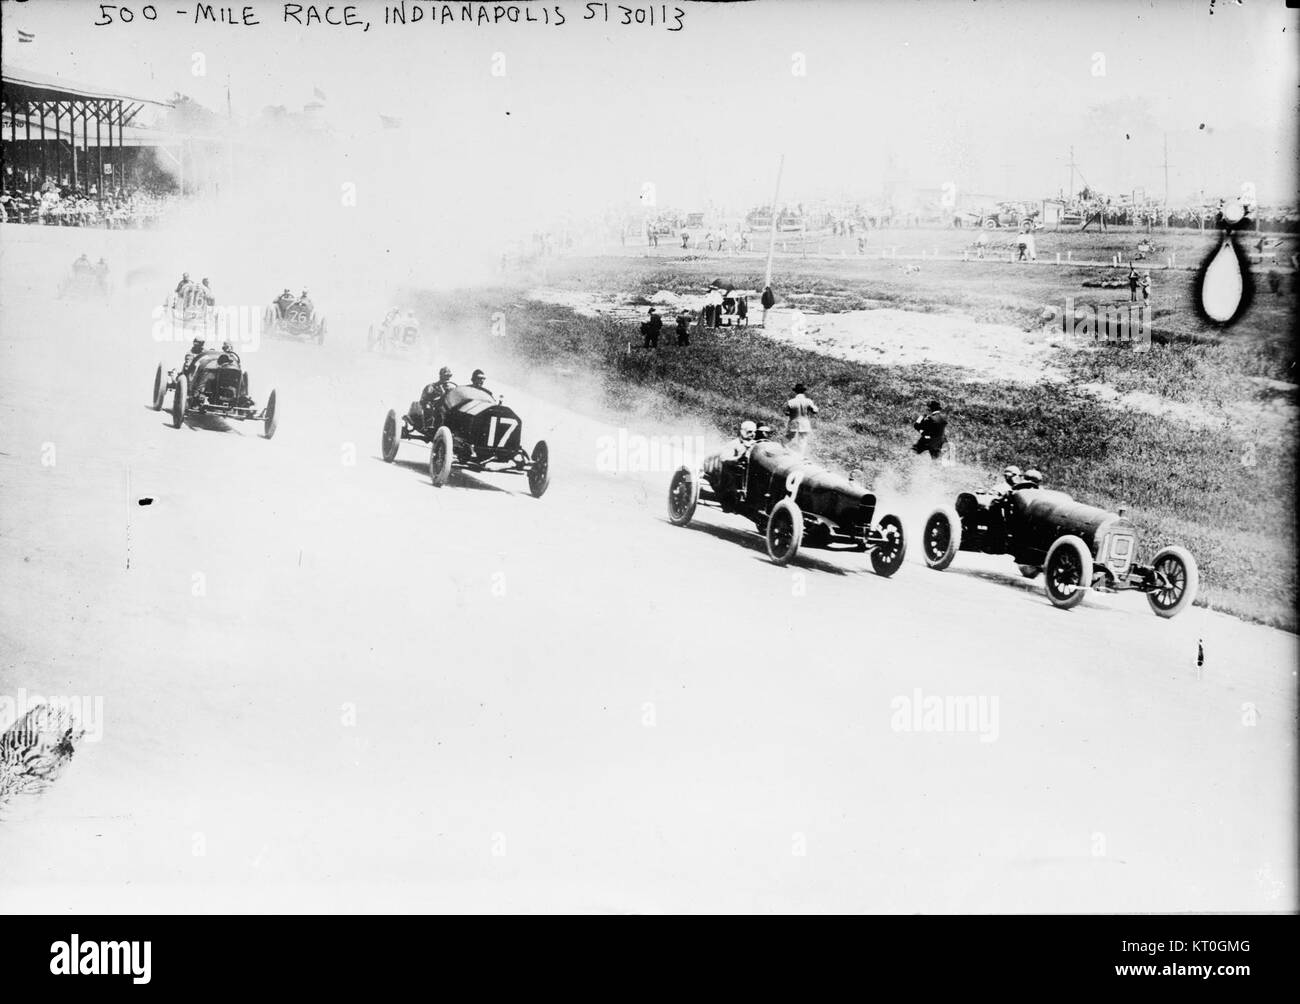 1913 Indianapolis 500 Stock Photo